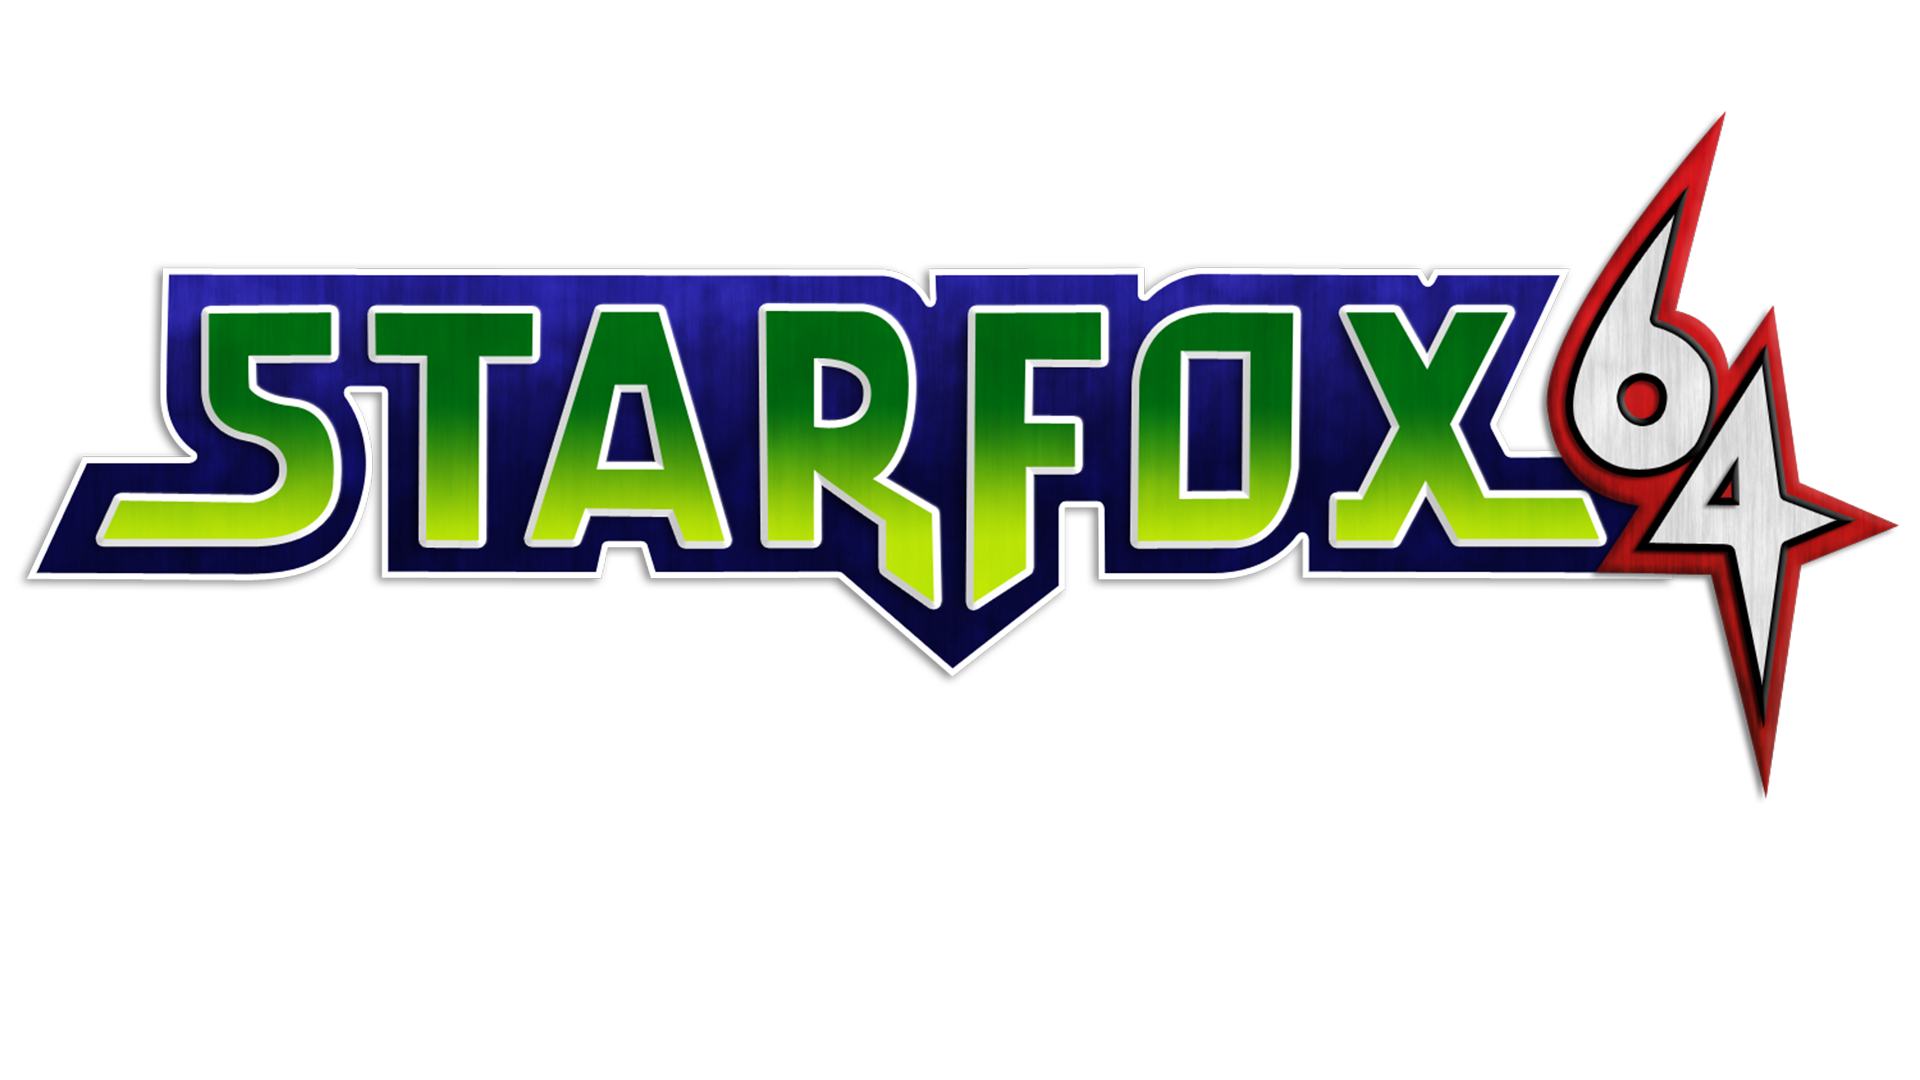 Star Fox 64 Logo